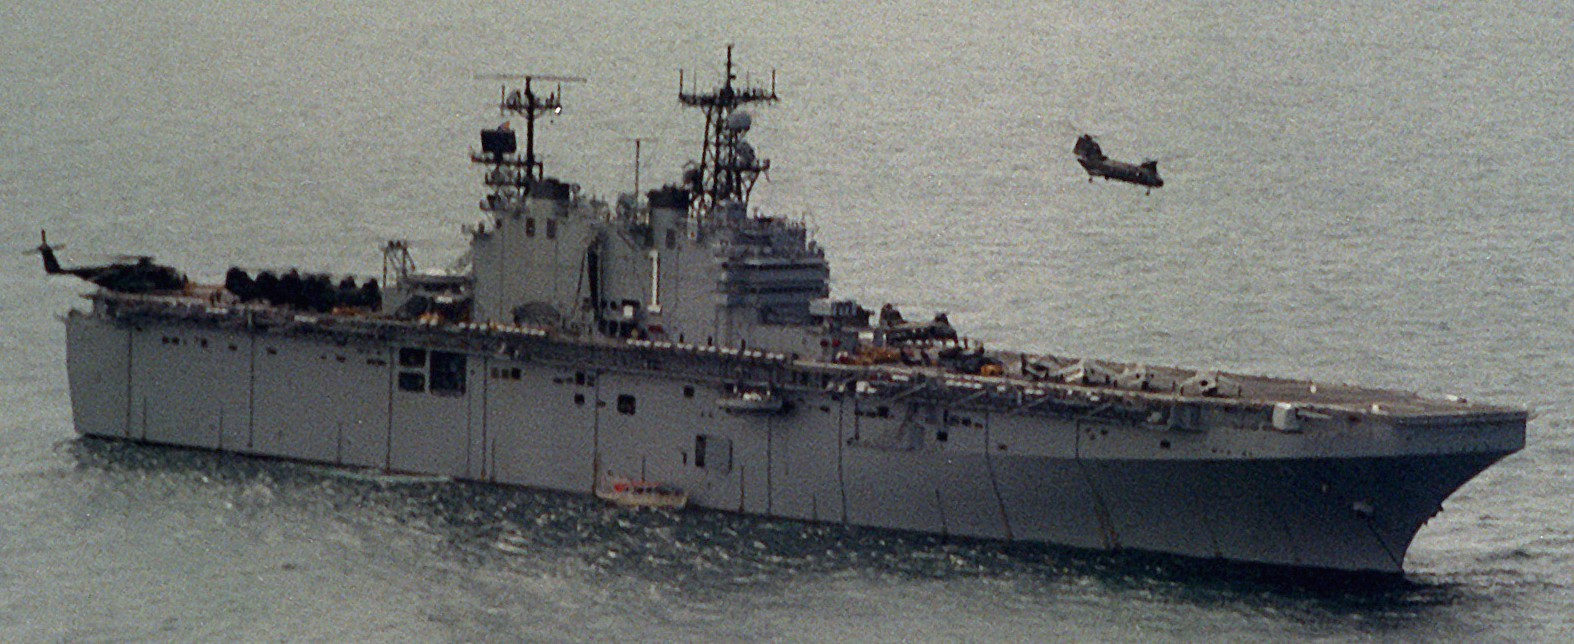 lha-1 uss tarawa amphibious assault ship us navy 13th mau marines hmm-161 65